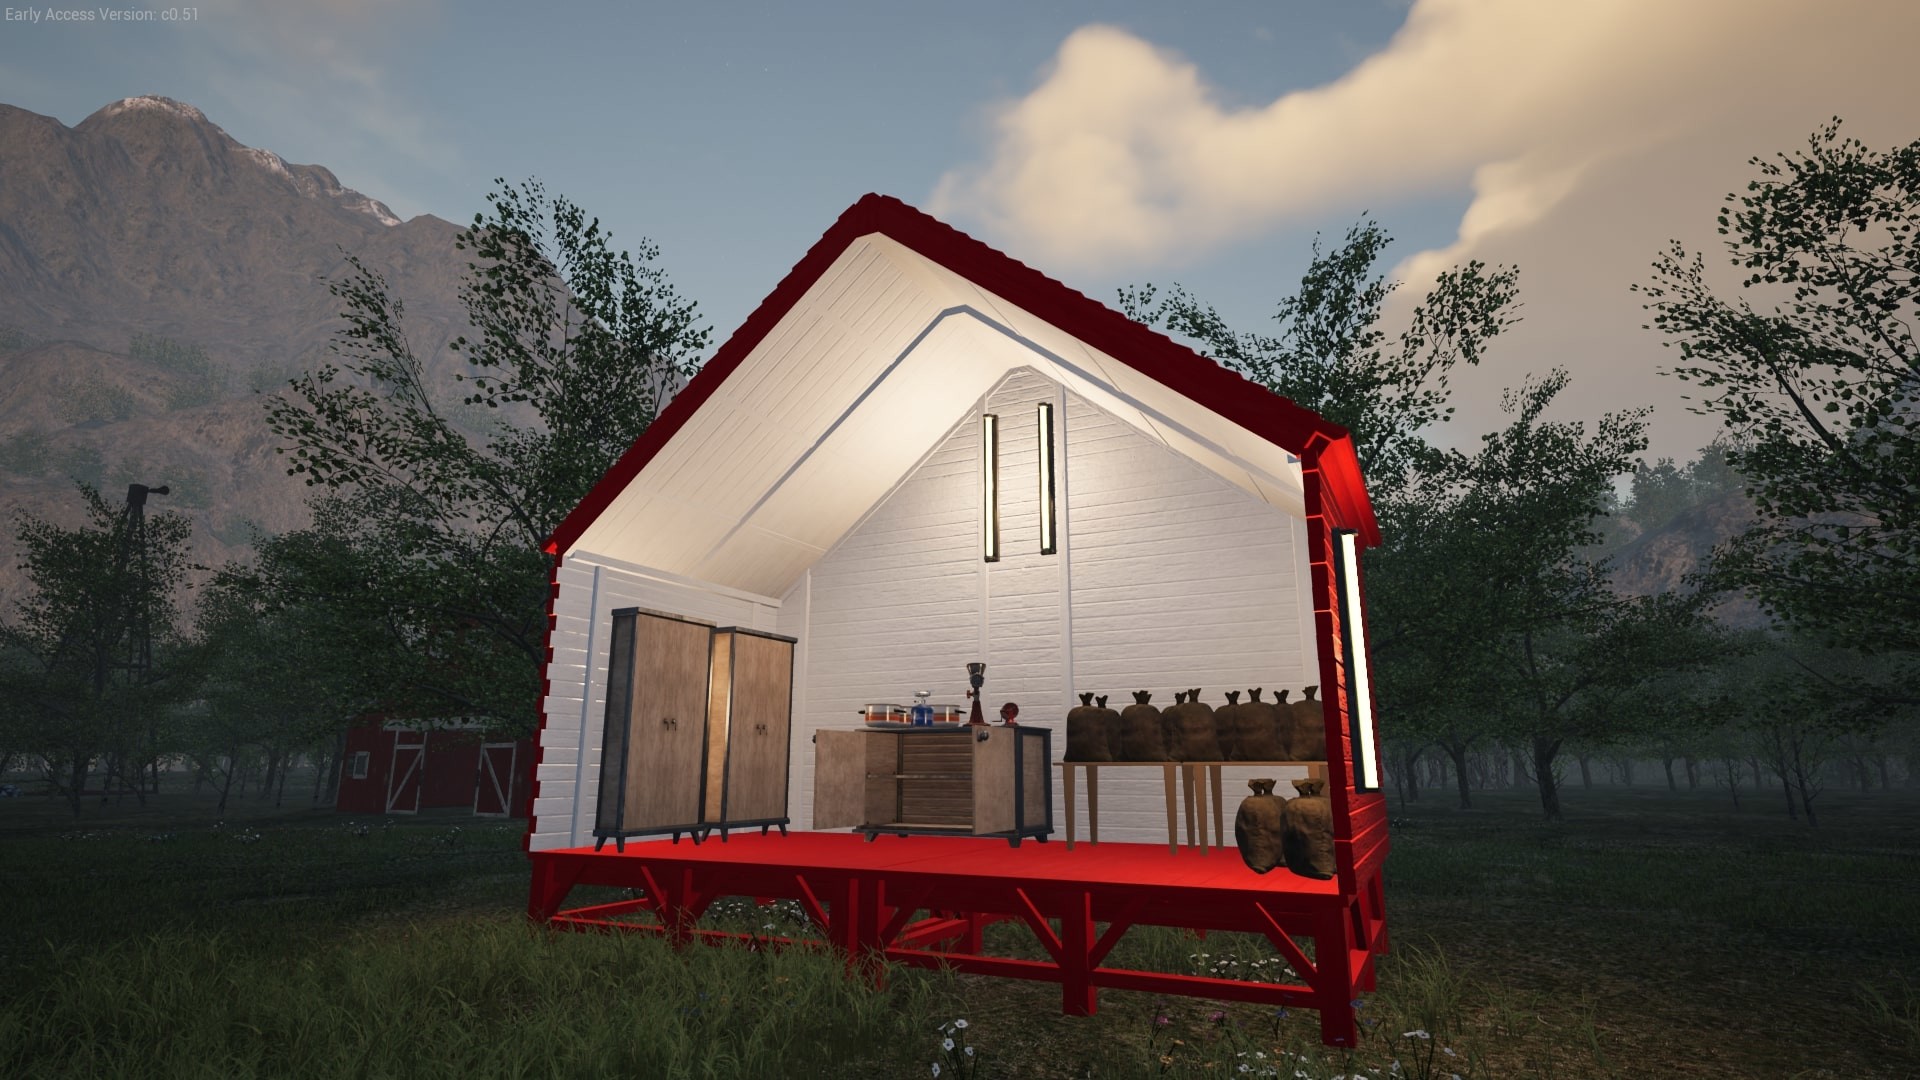 Ranch Simulator - Build, Farm, Hunt [PC] First Look 